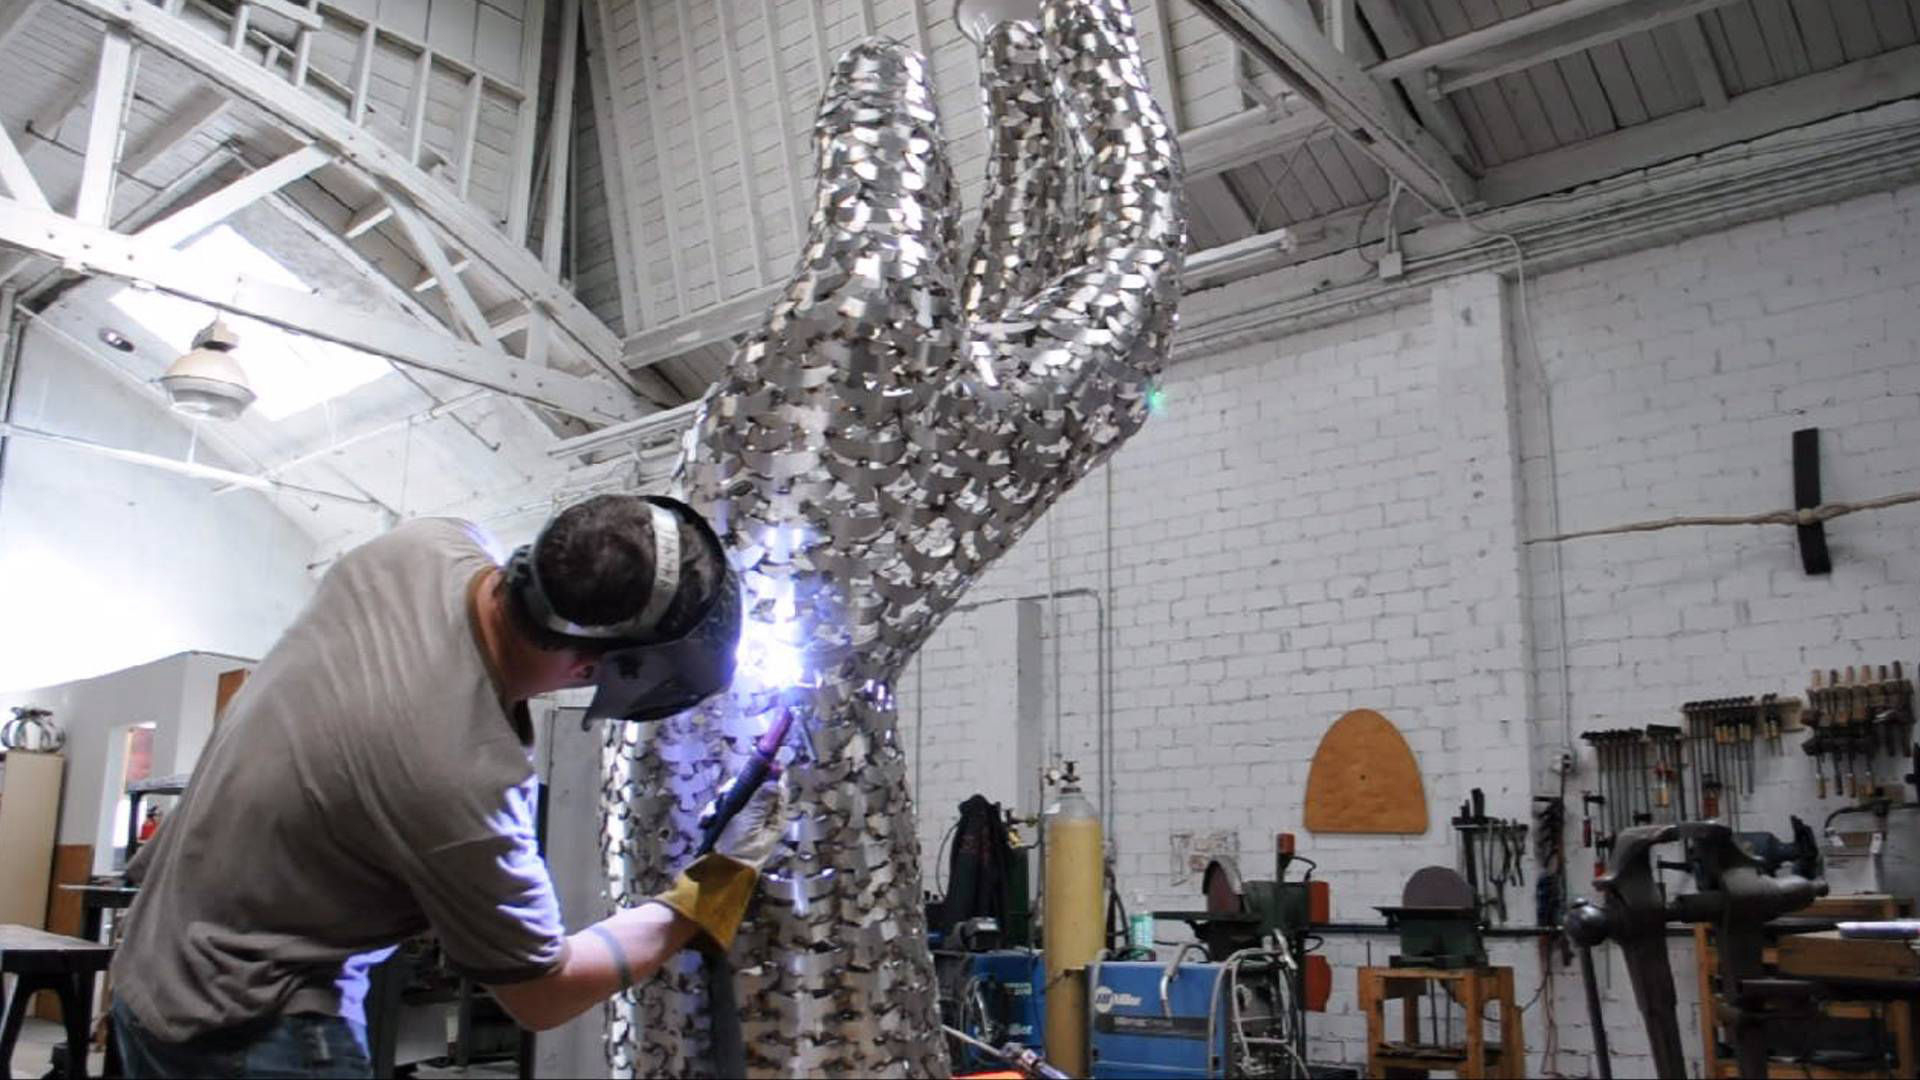 Heath Satow Sculpture - Welding the 9/11 memorial, a polished stainless steel art sculpture by Heath Satow in Rosemead, CA